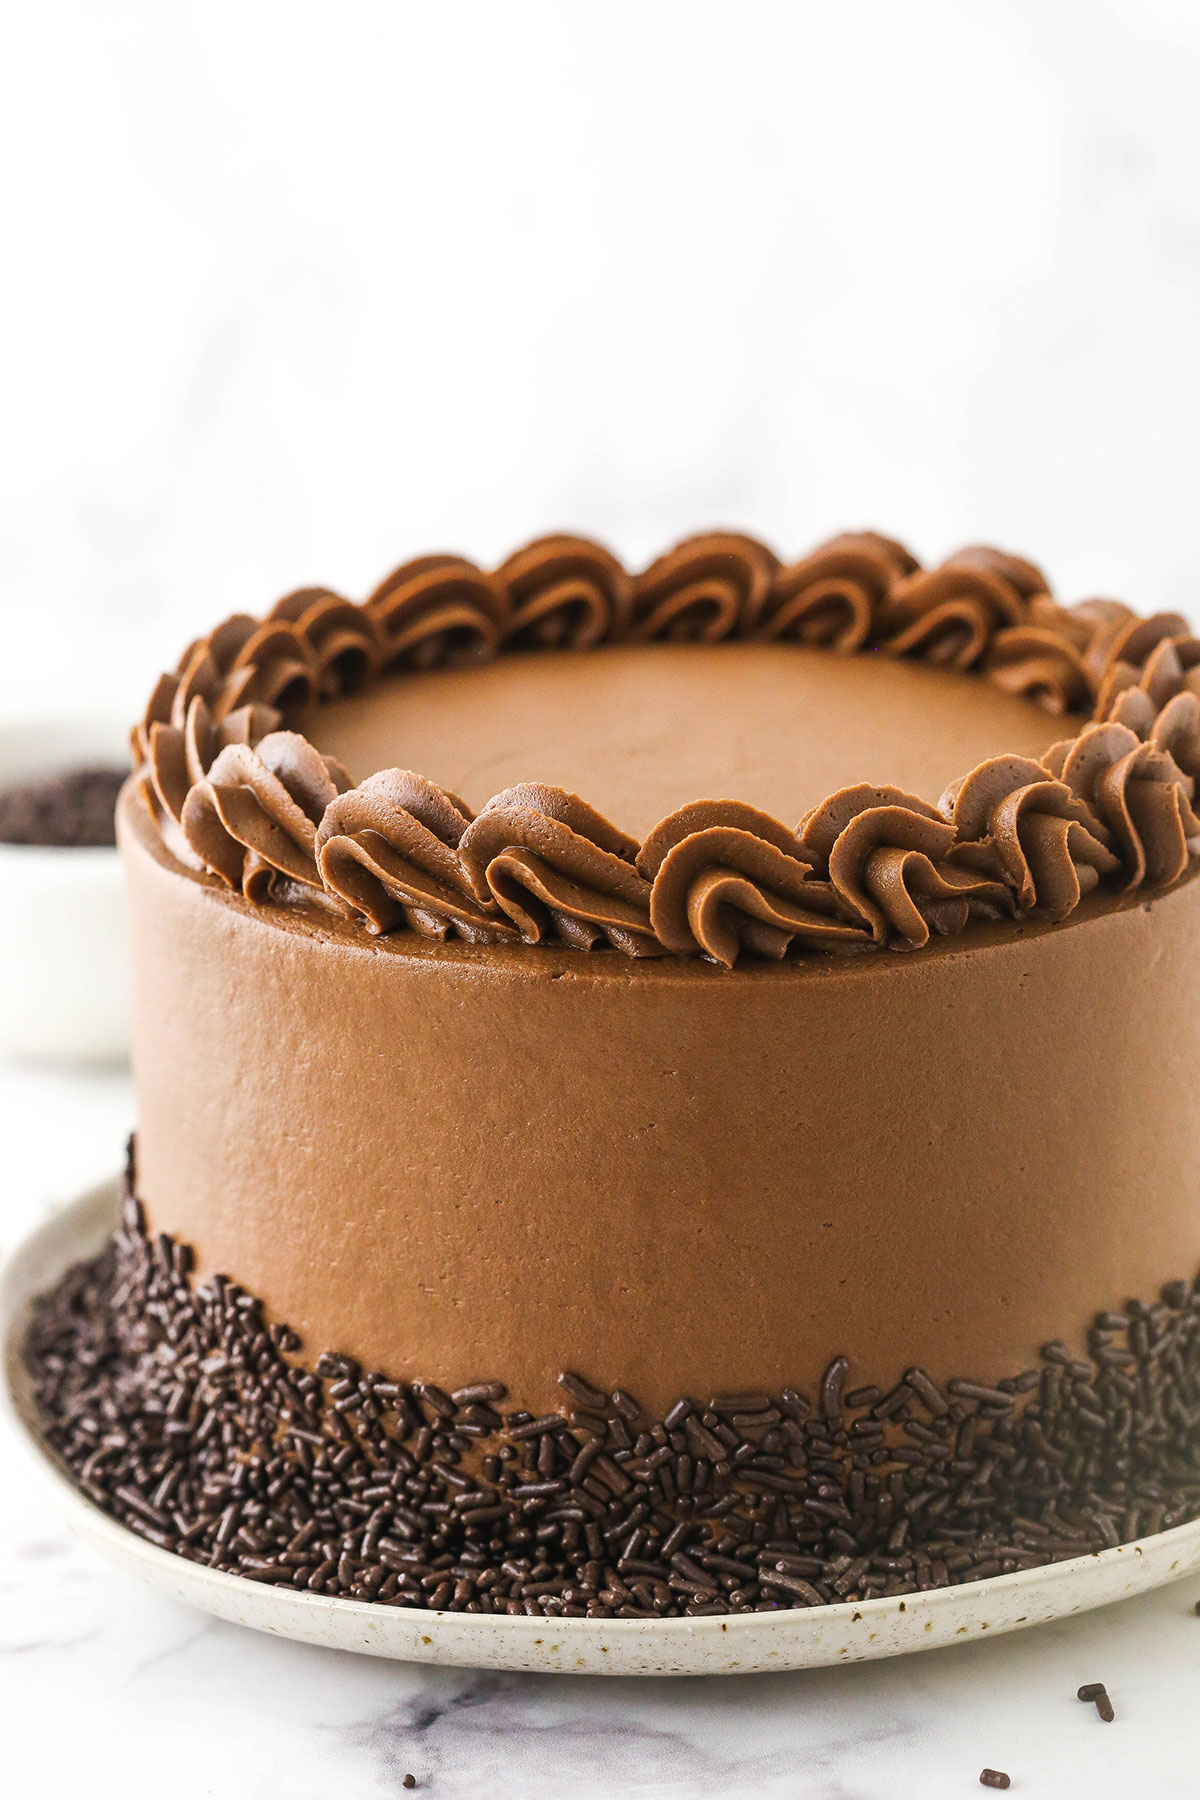 Easy 6 Inch Chocolate Cake | Life Love & Sugar